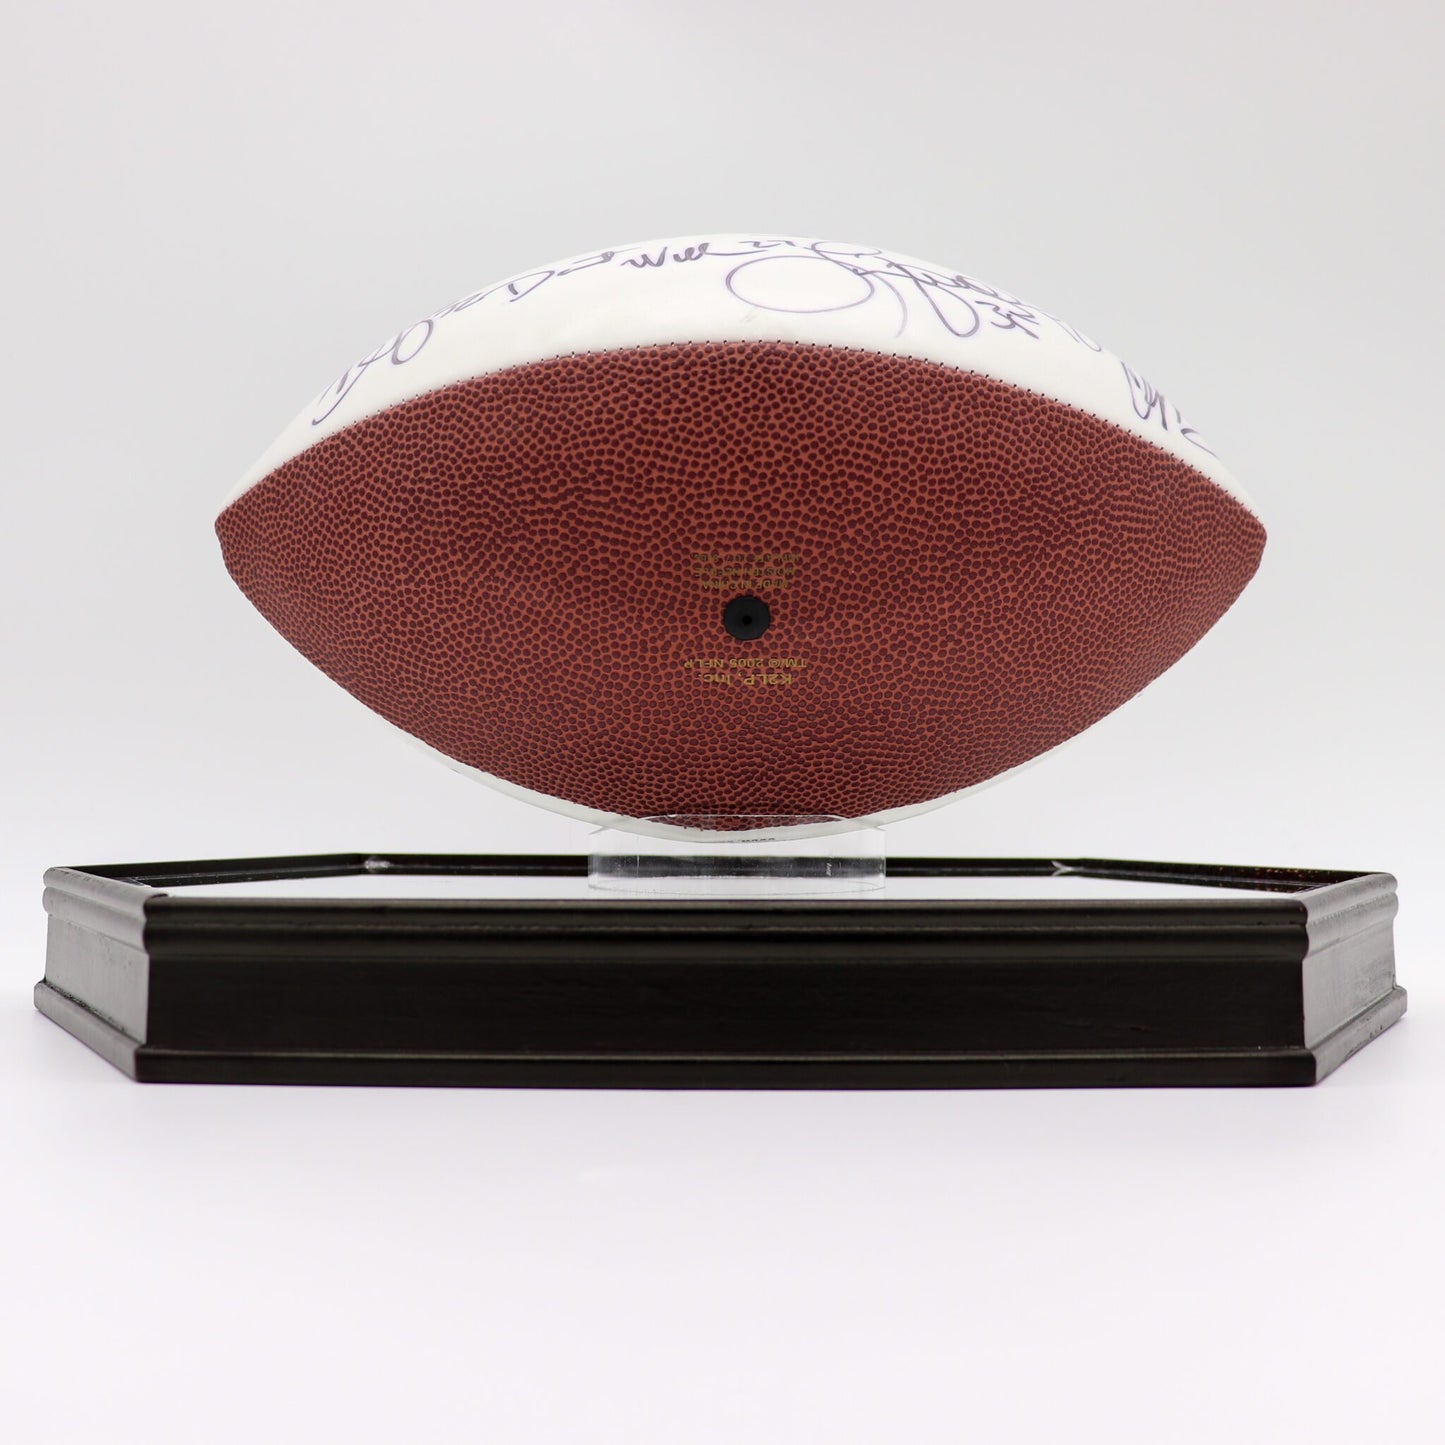 Autographed Denver Broncos Back-To-Back Super Bowl Champions Team-Signed Football, Limited Edition, Mint